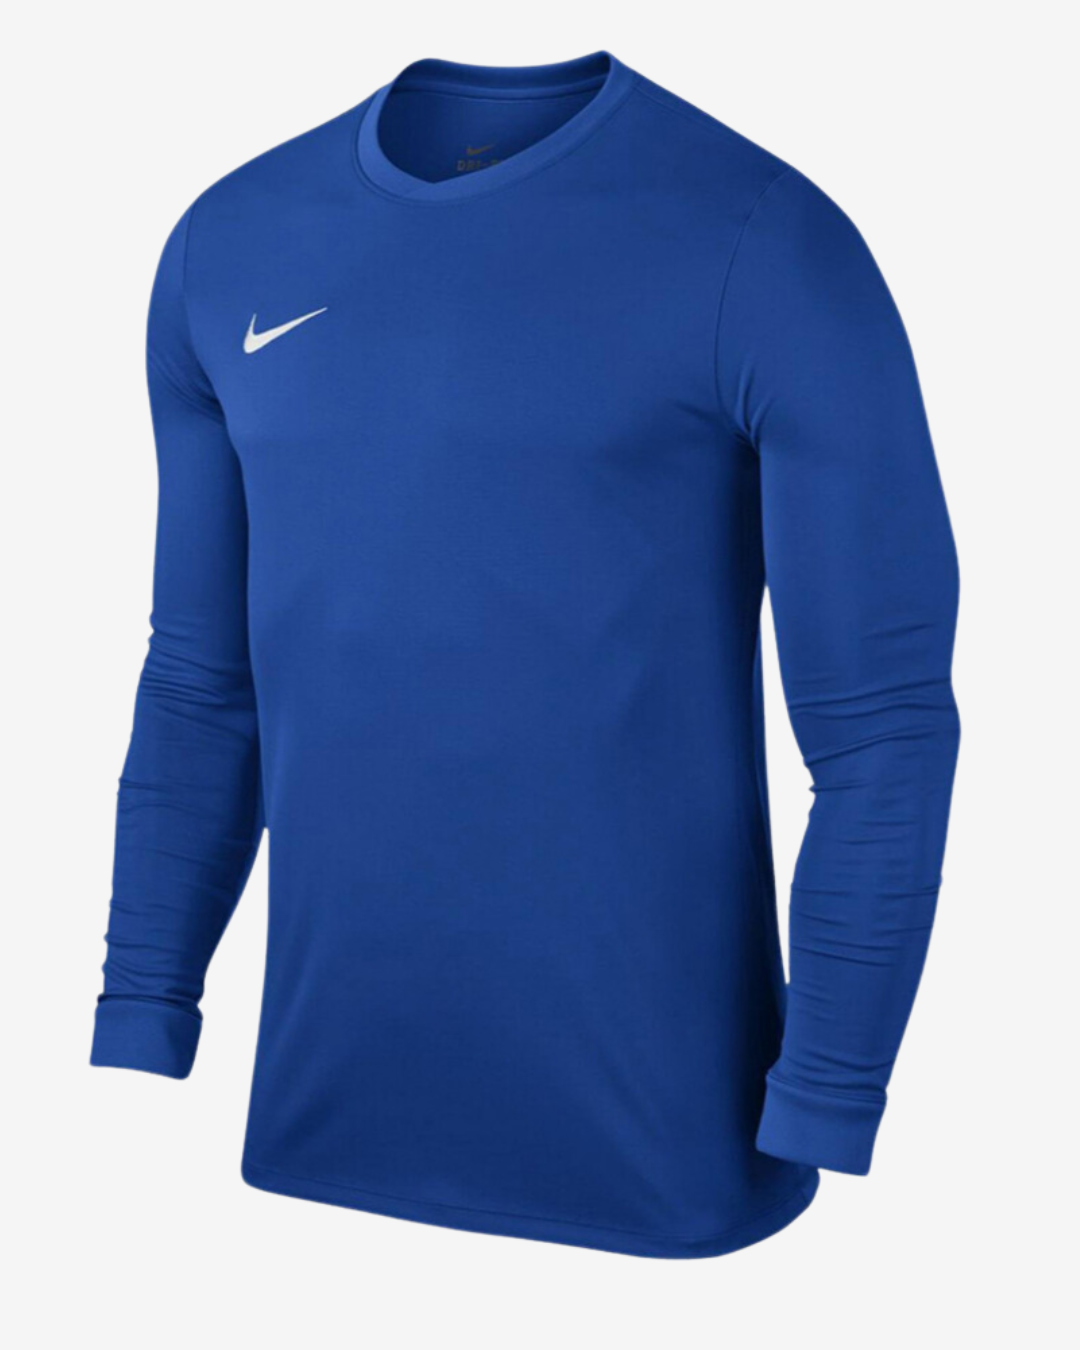 Nike Dri-fit park 7 langærmet t-shirt - Blå - Str. S - Modish.dk